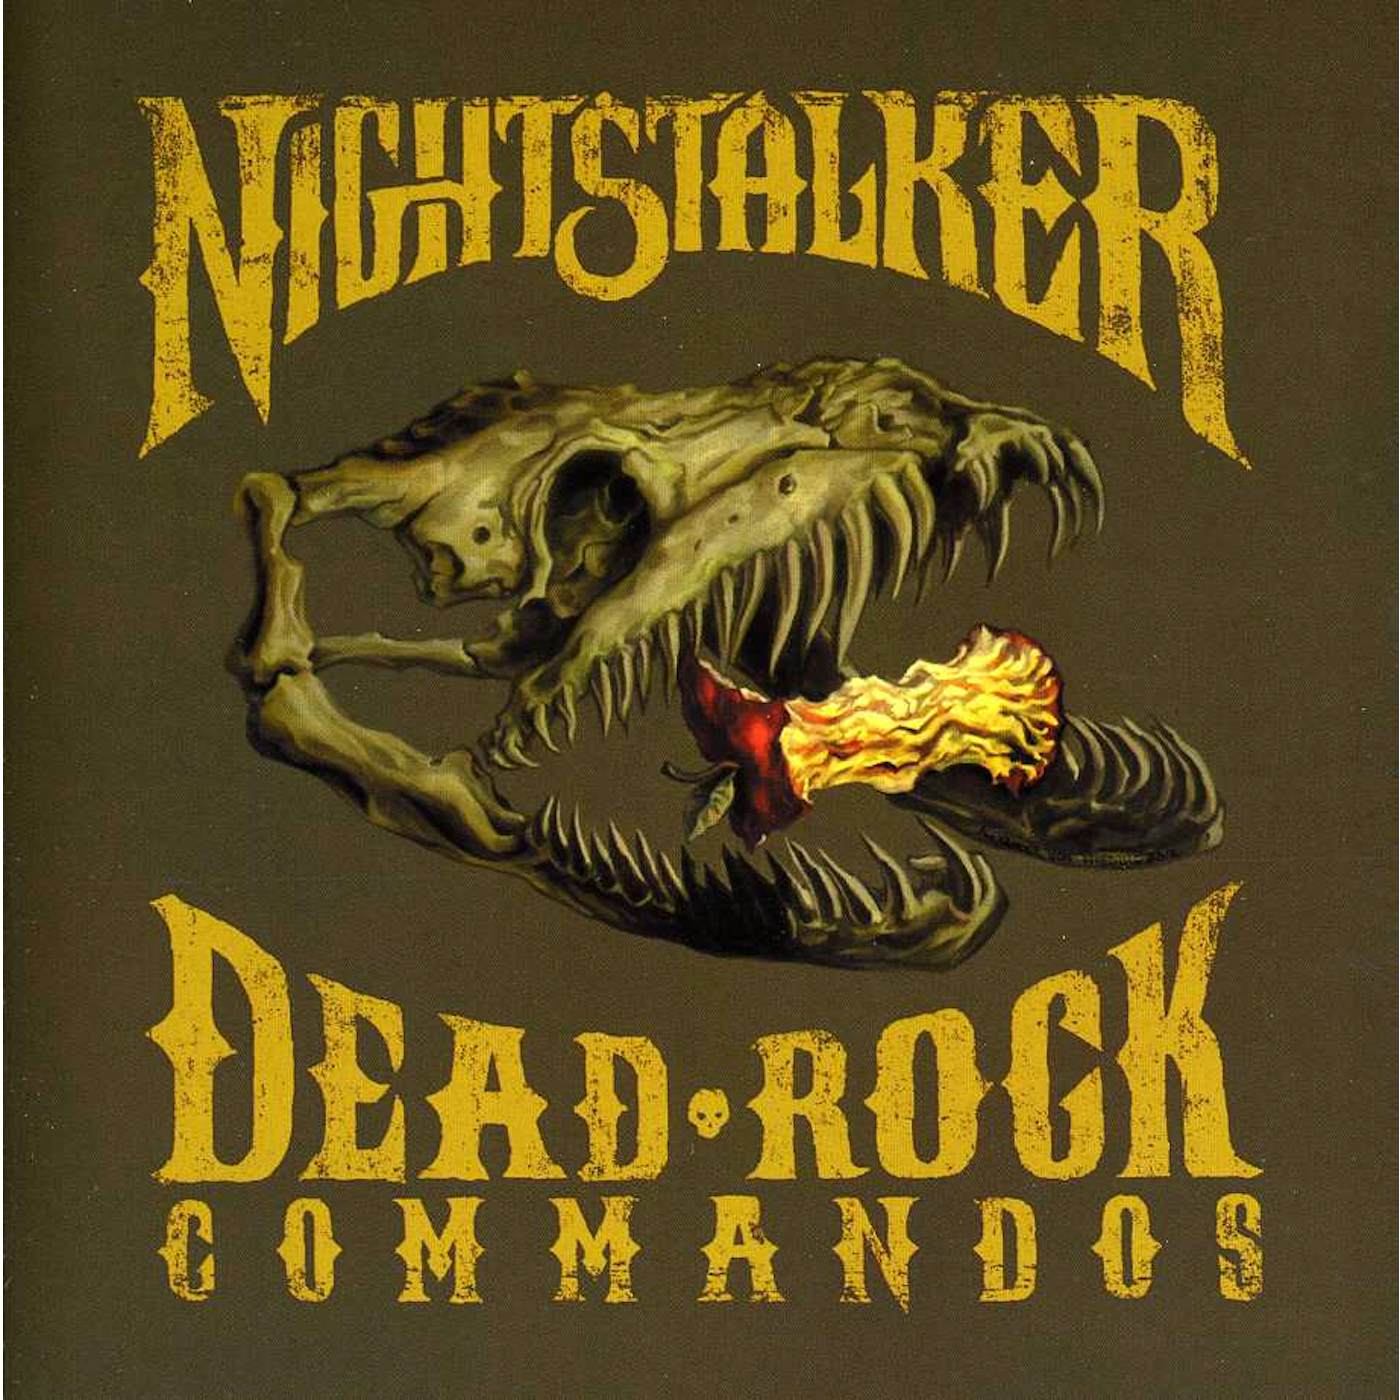 Nightstalker DEAD ROCK COMMANDOS CD